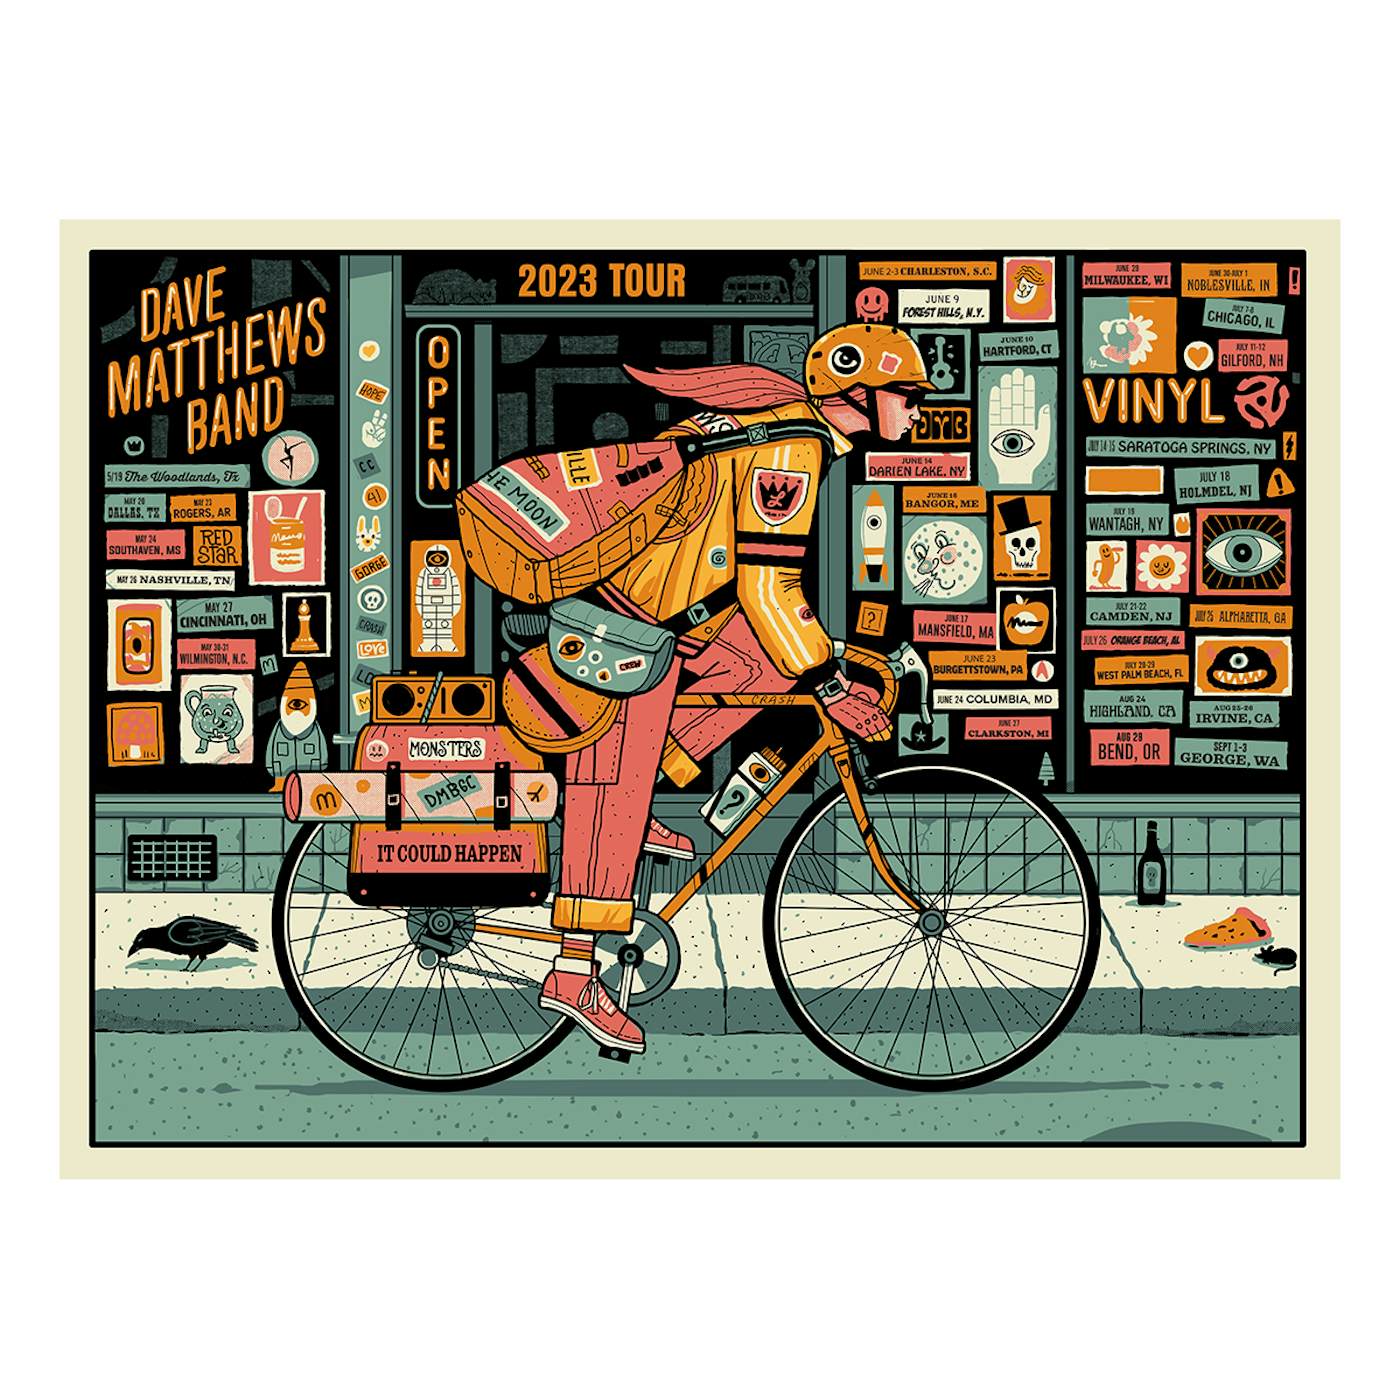 Dave Matthews Band 2023 Summer Tour Date Poster - Bicycle